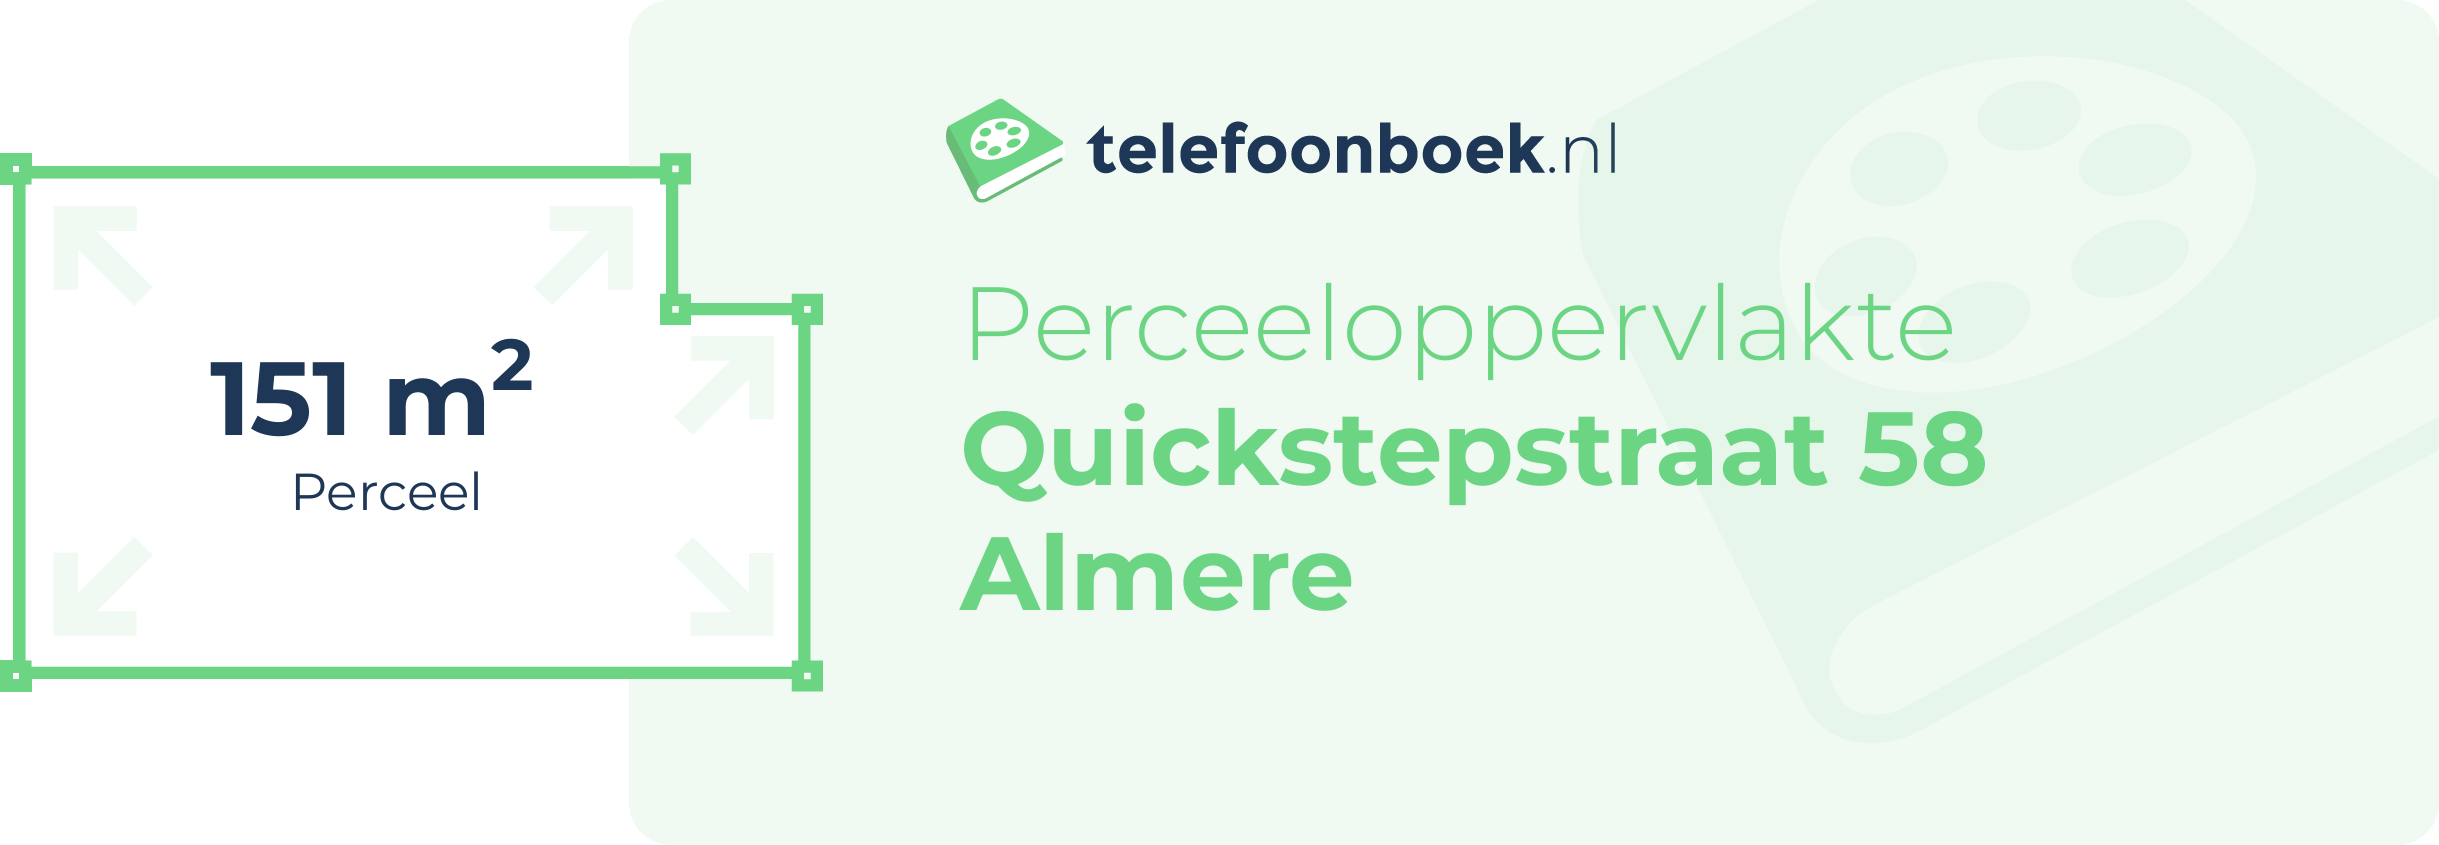 Perceeloppervlakte Quickstepstraat 58 Almere